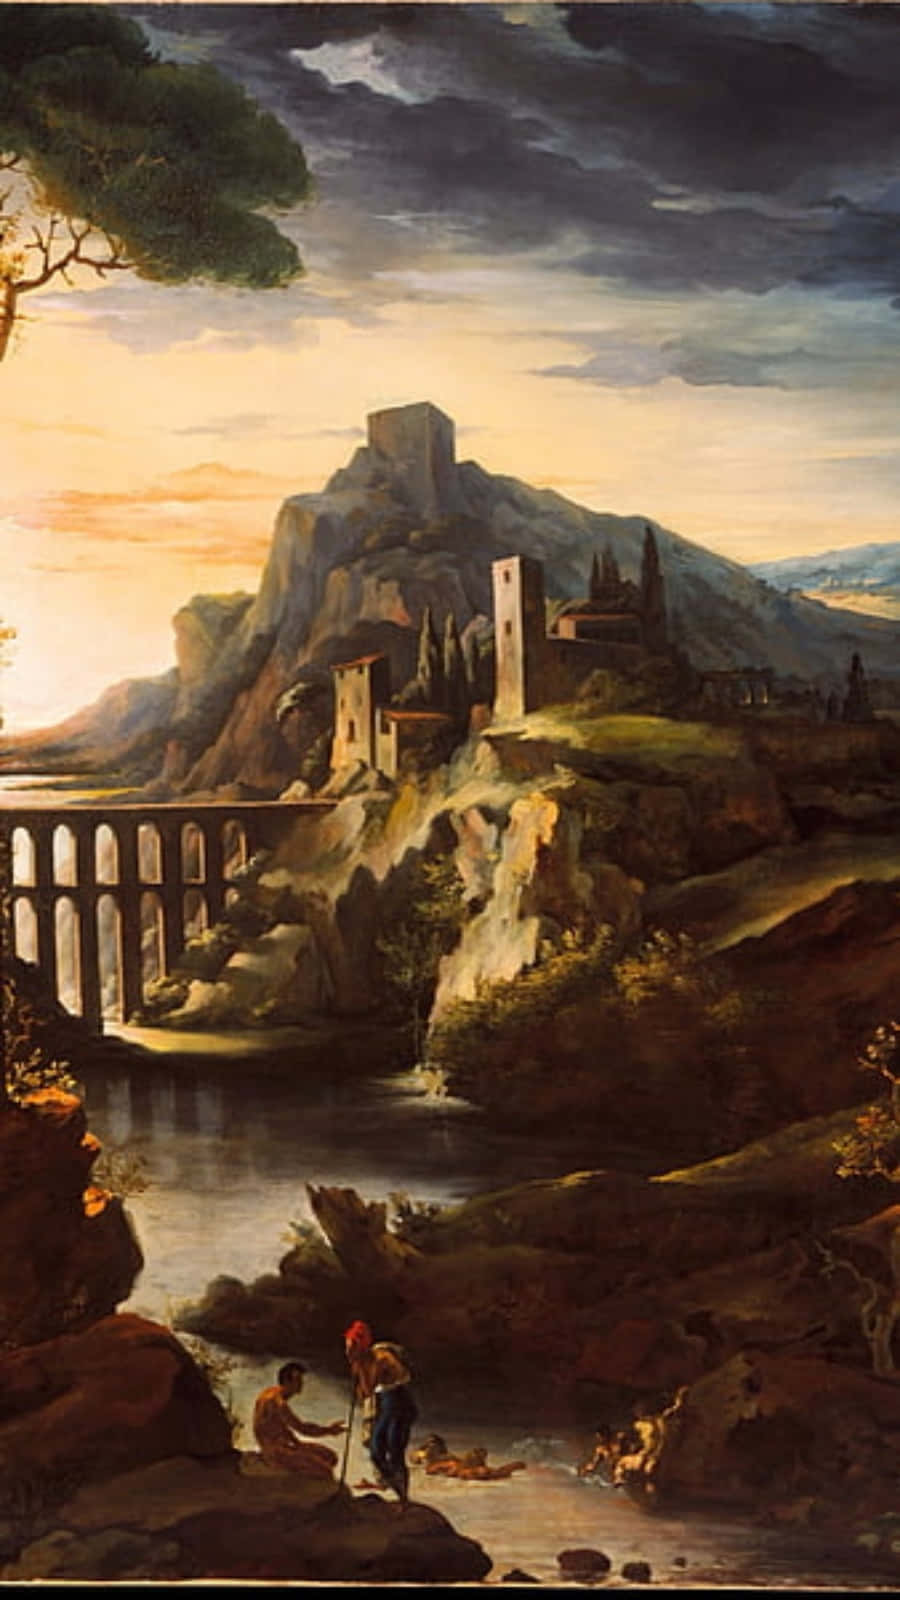 "The Maiden's Castle" Wallpaper